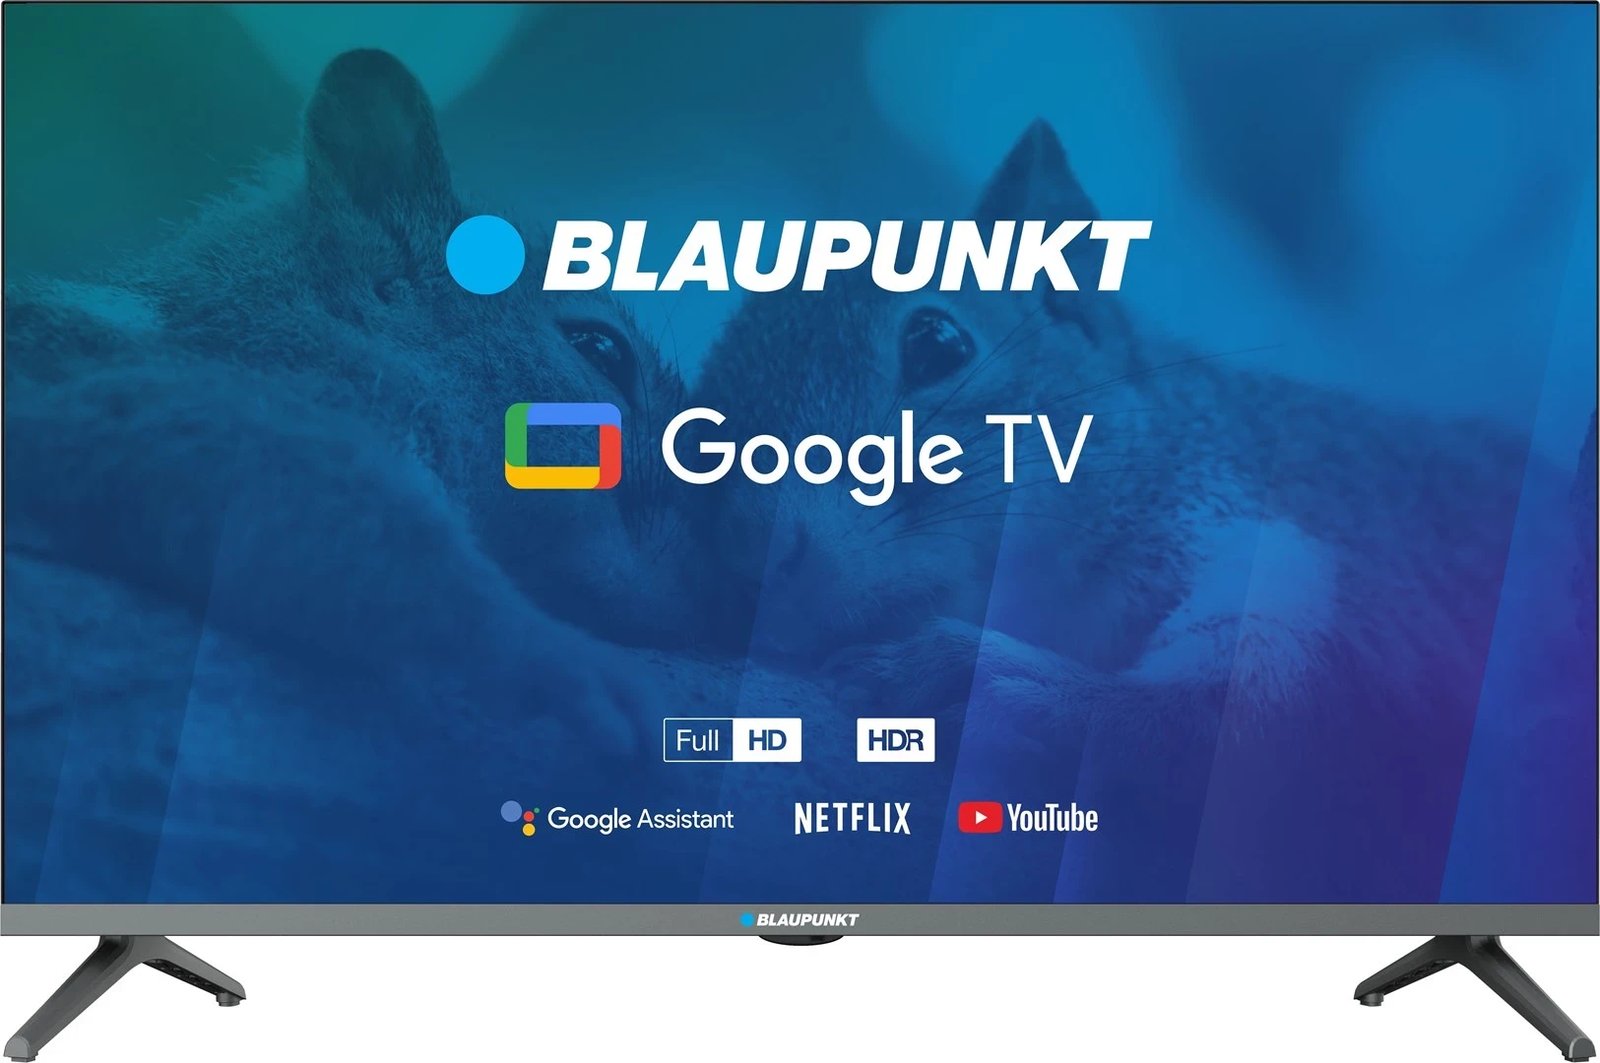 Televizor Blaupunkt 32FBG5000S 32", Full HD LED, GoogleTV, Dolby Digital, WiFi 2,4-5GHz, BT, ngjyrë e zezë